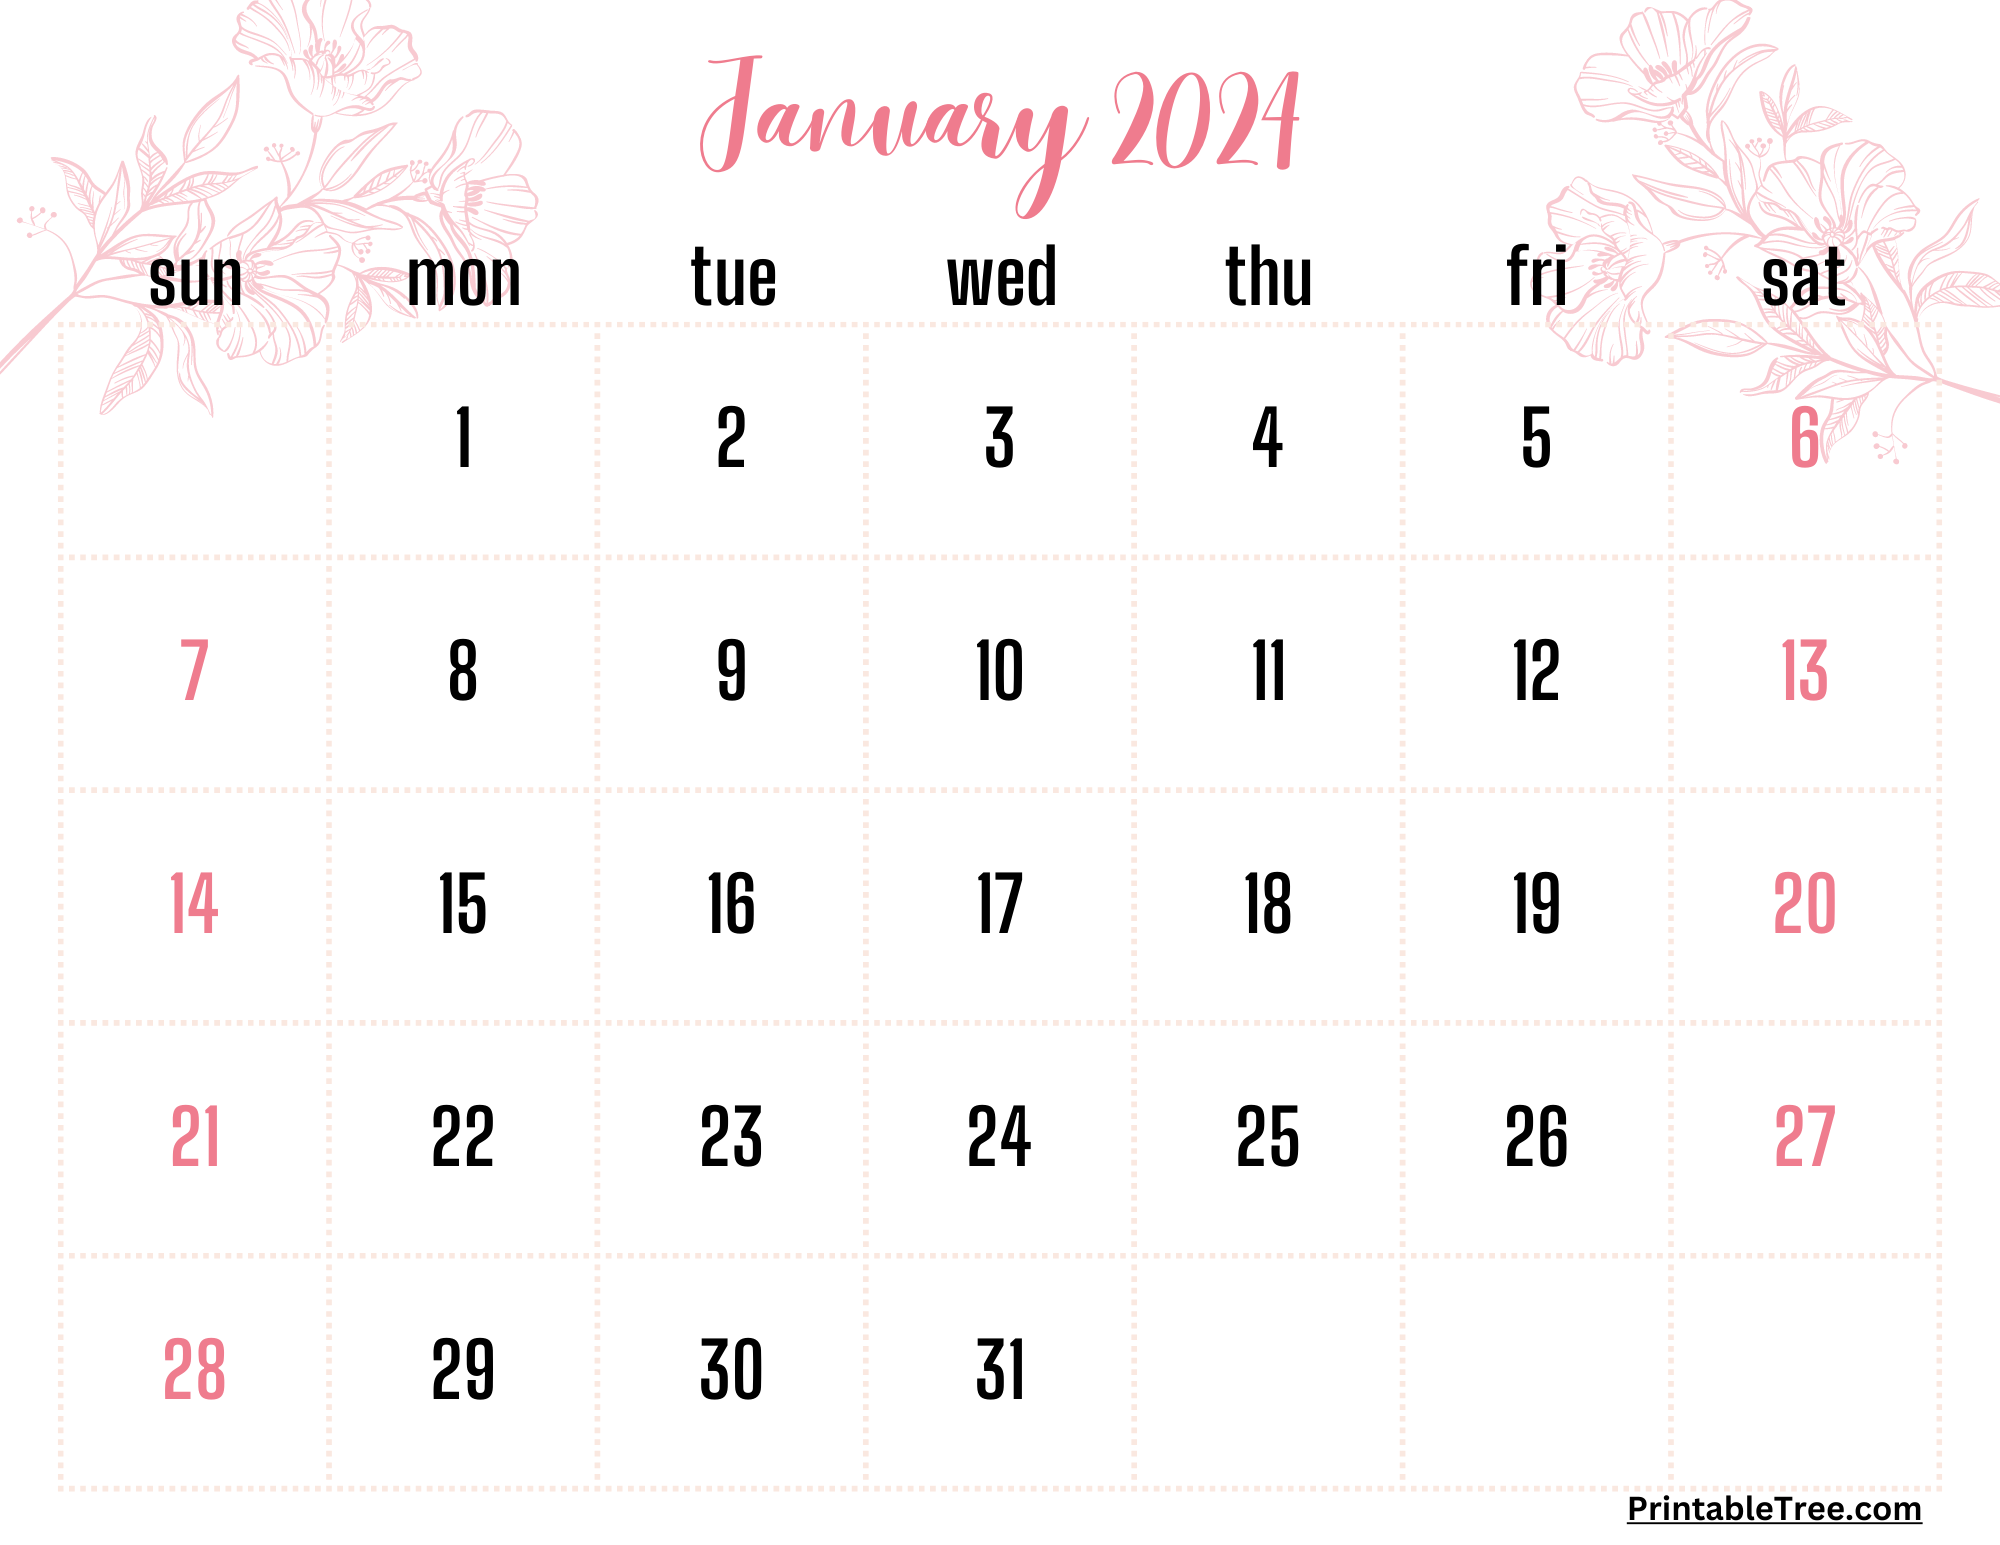 January 2024 Calendar Printable PDF Template with Holidays